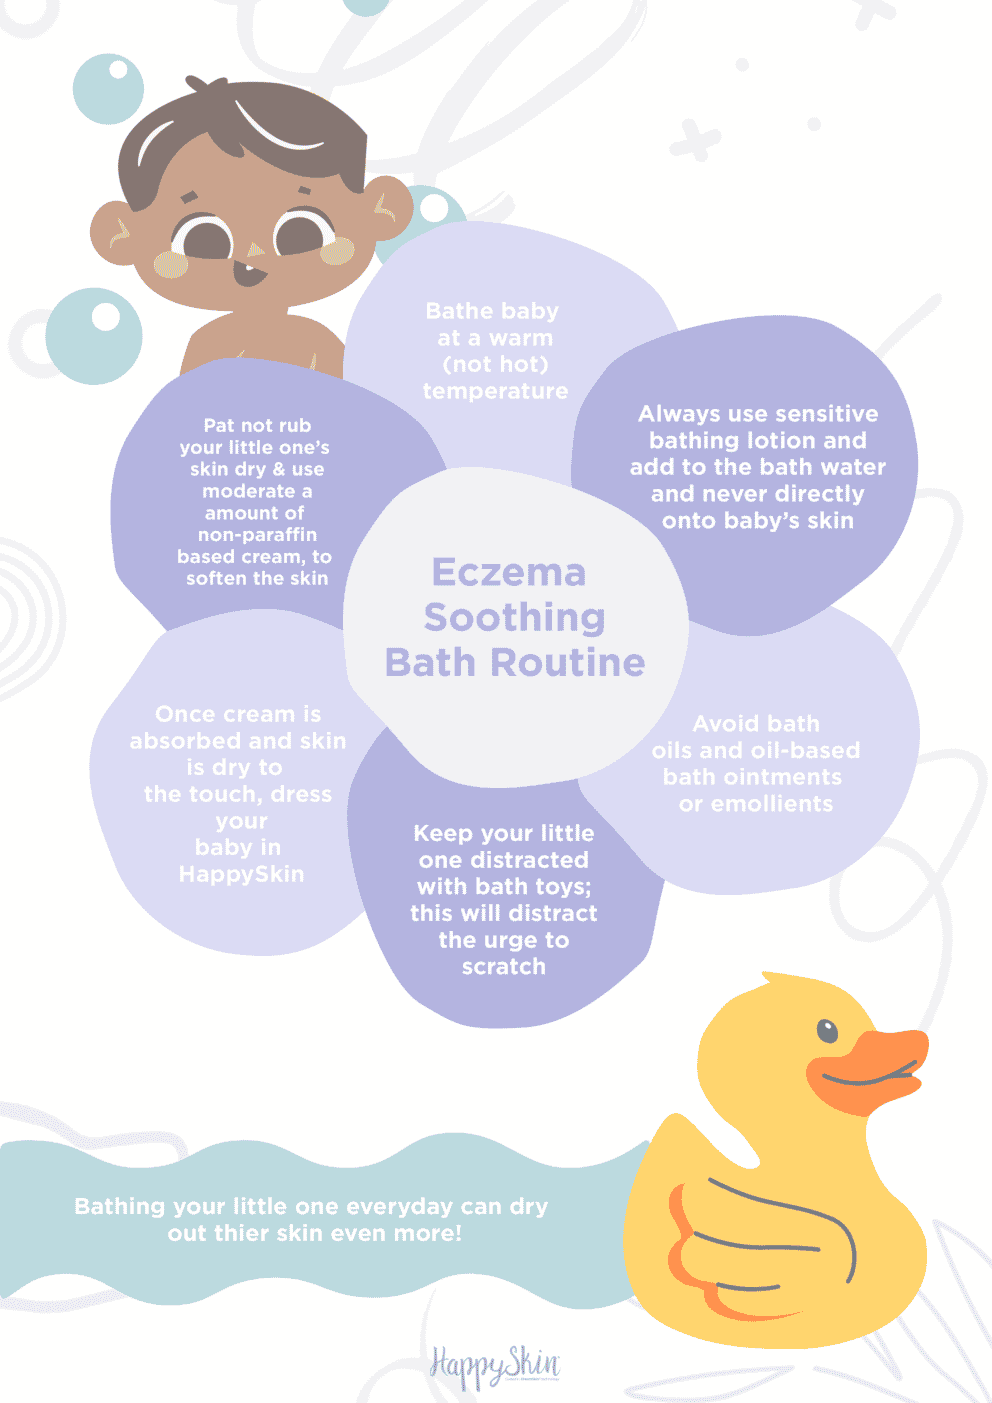 Eczema soothing bath routine